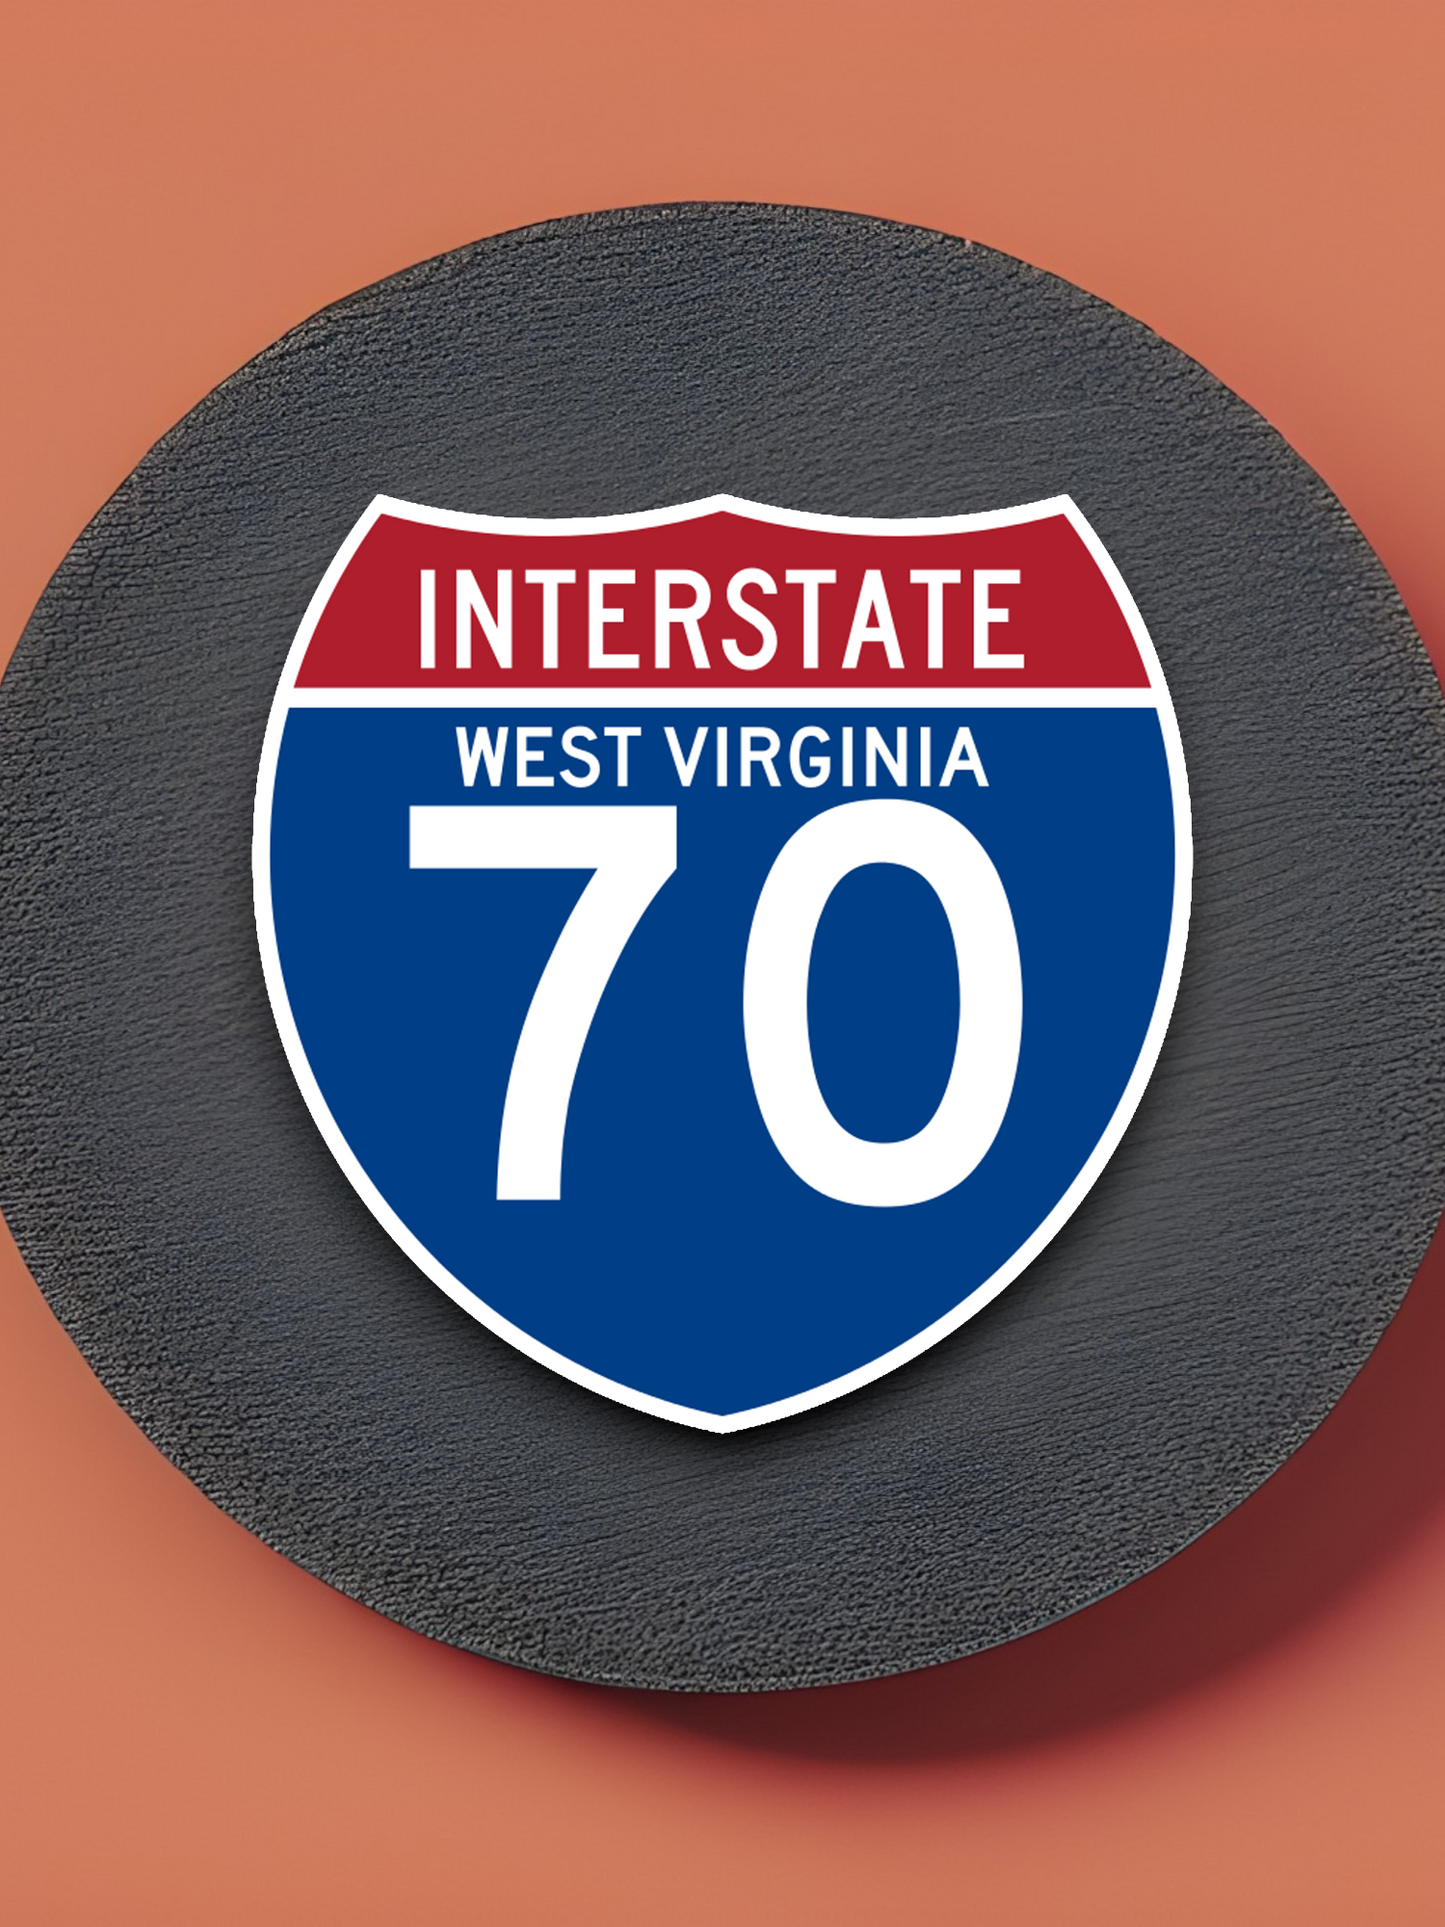 Interstate I-70 West Virginia - Road Sign Sticker